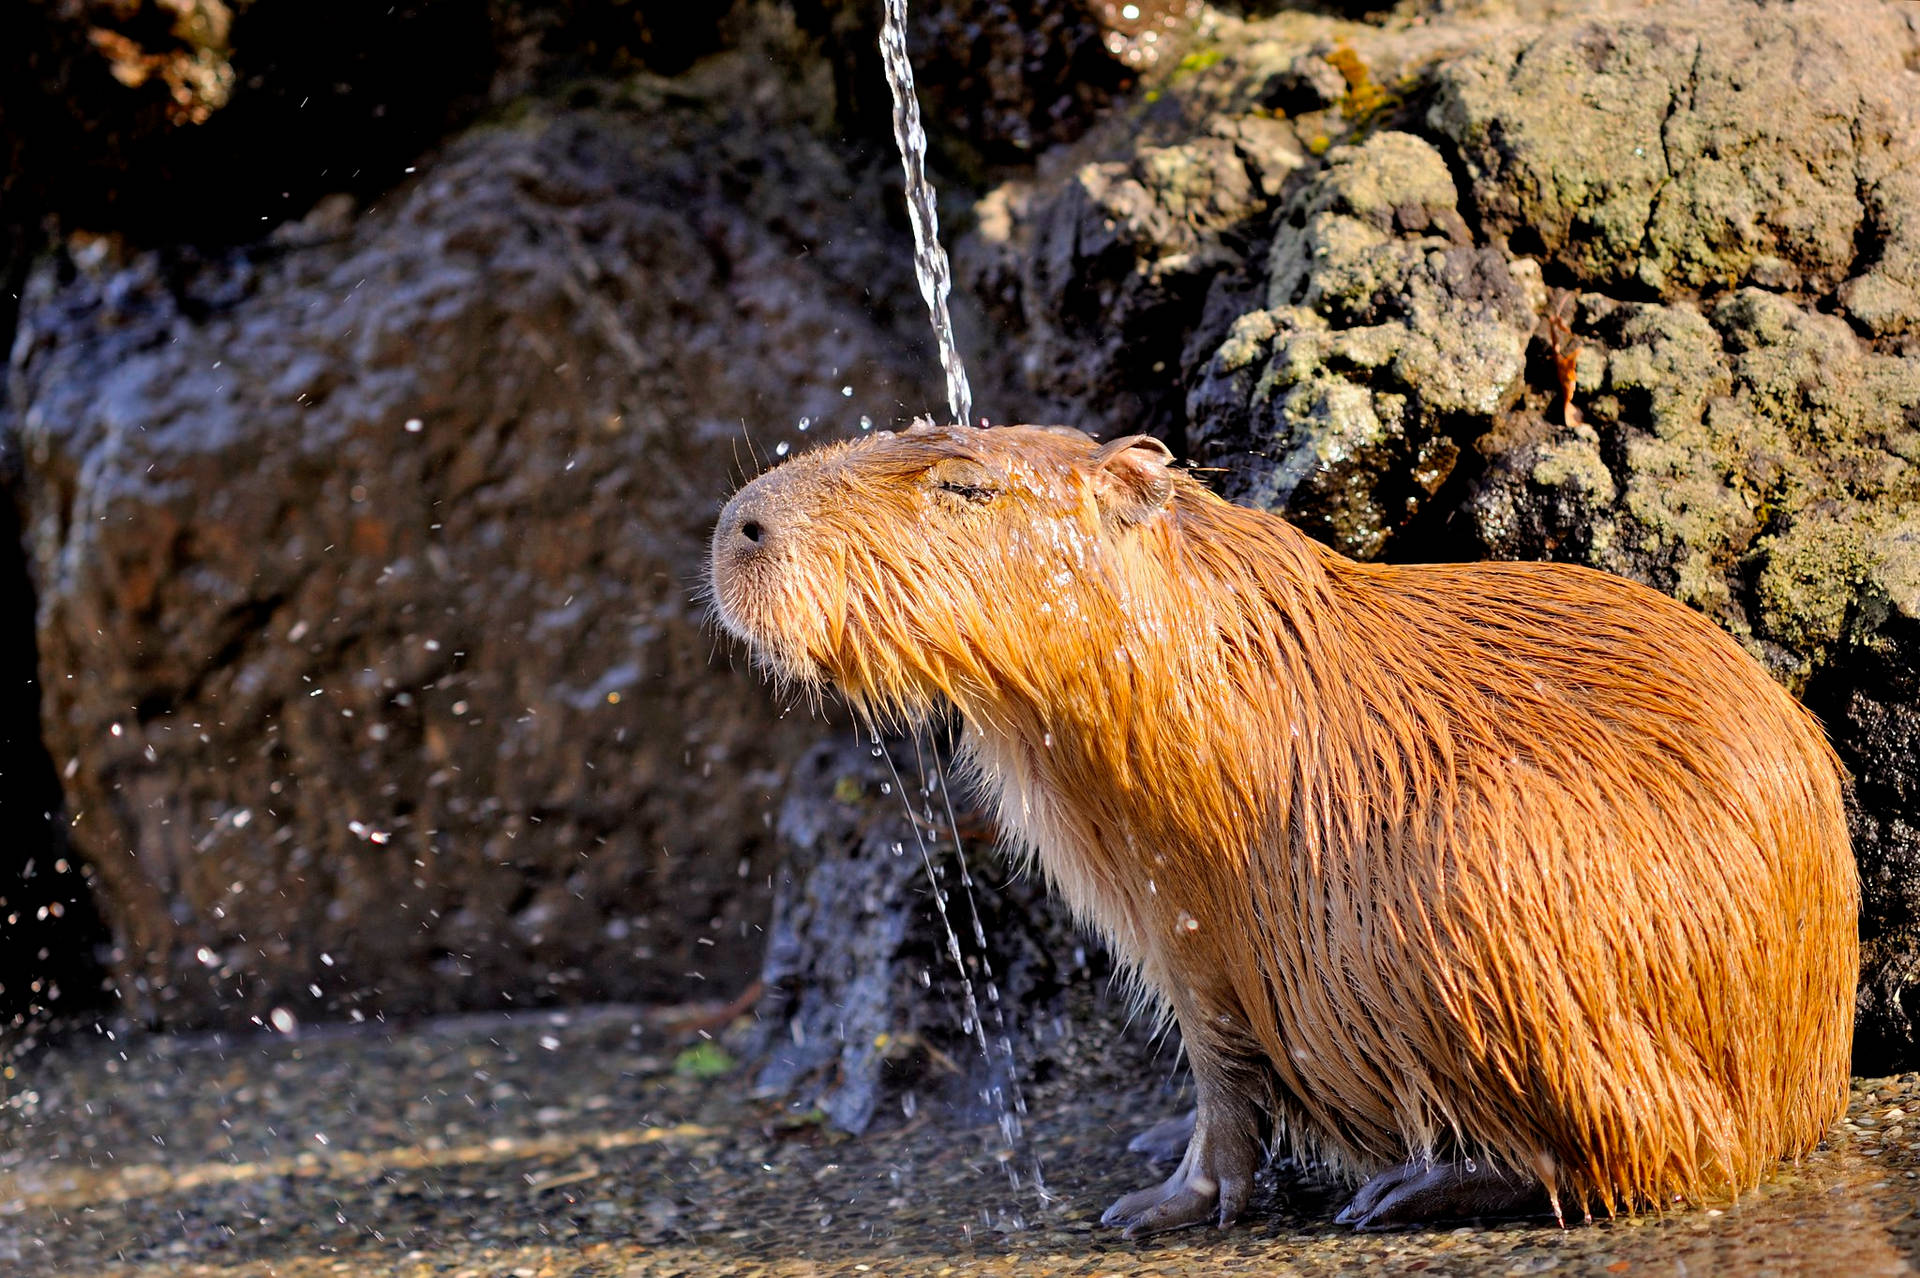 Showering Golden Capybara